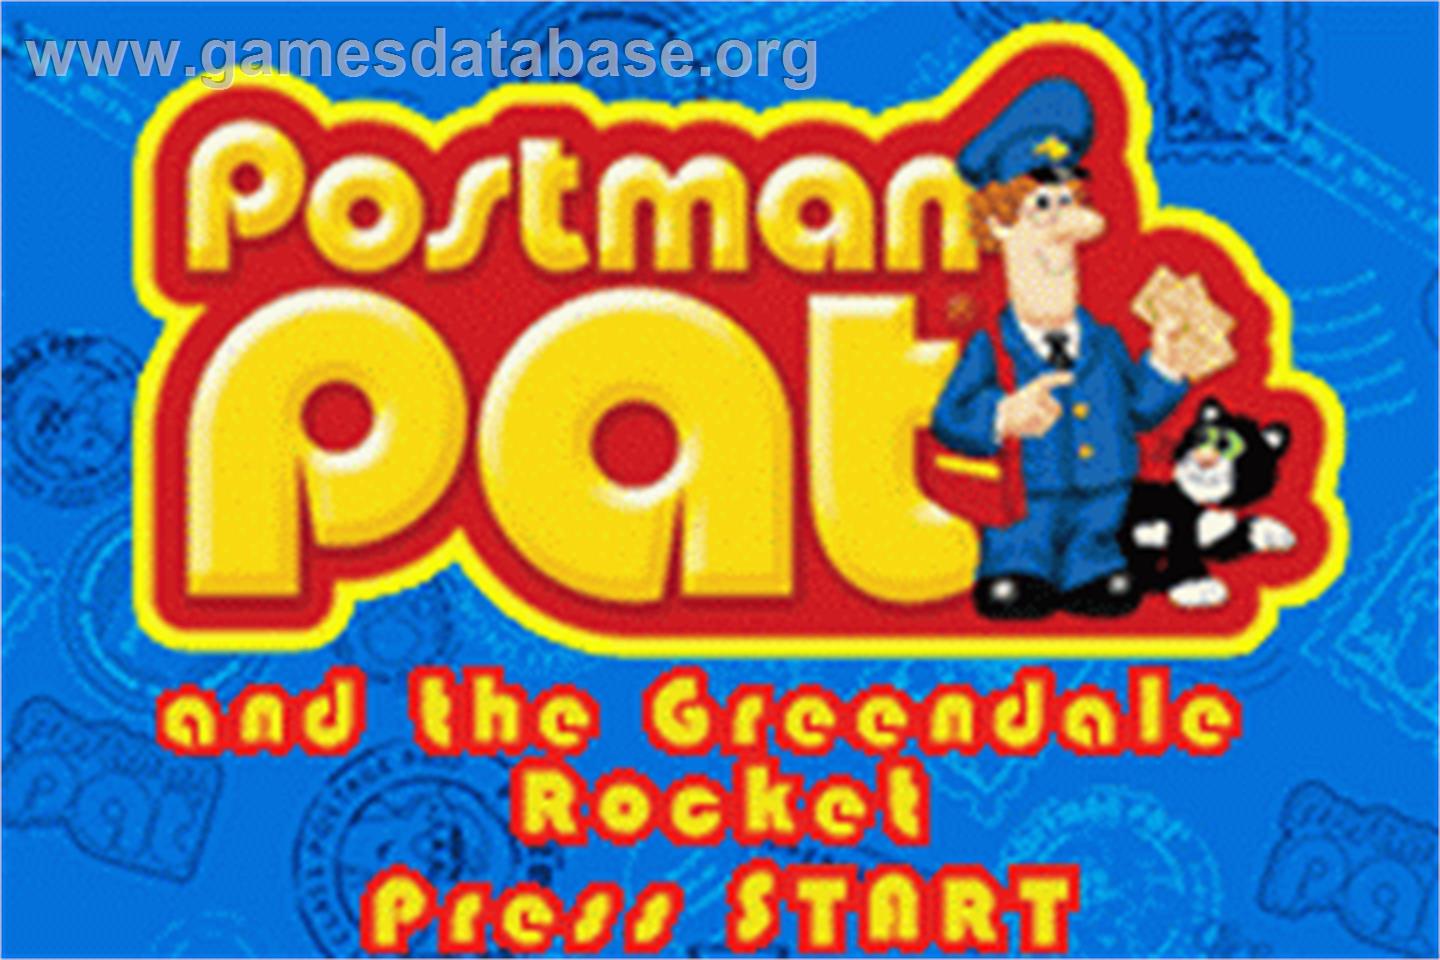 Postman Pat and the Greendale Rocket - Nintendo Game Boy Advance - Artwork - Title Screen